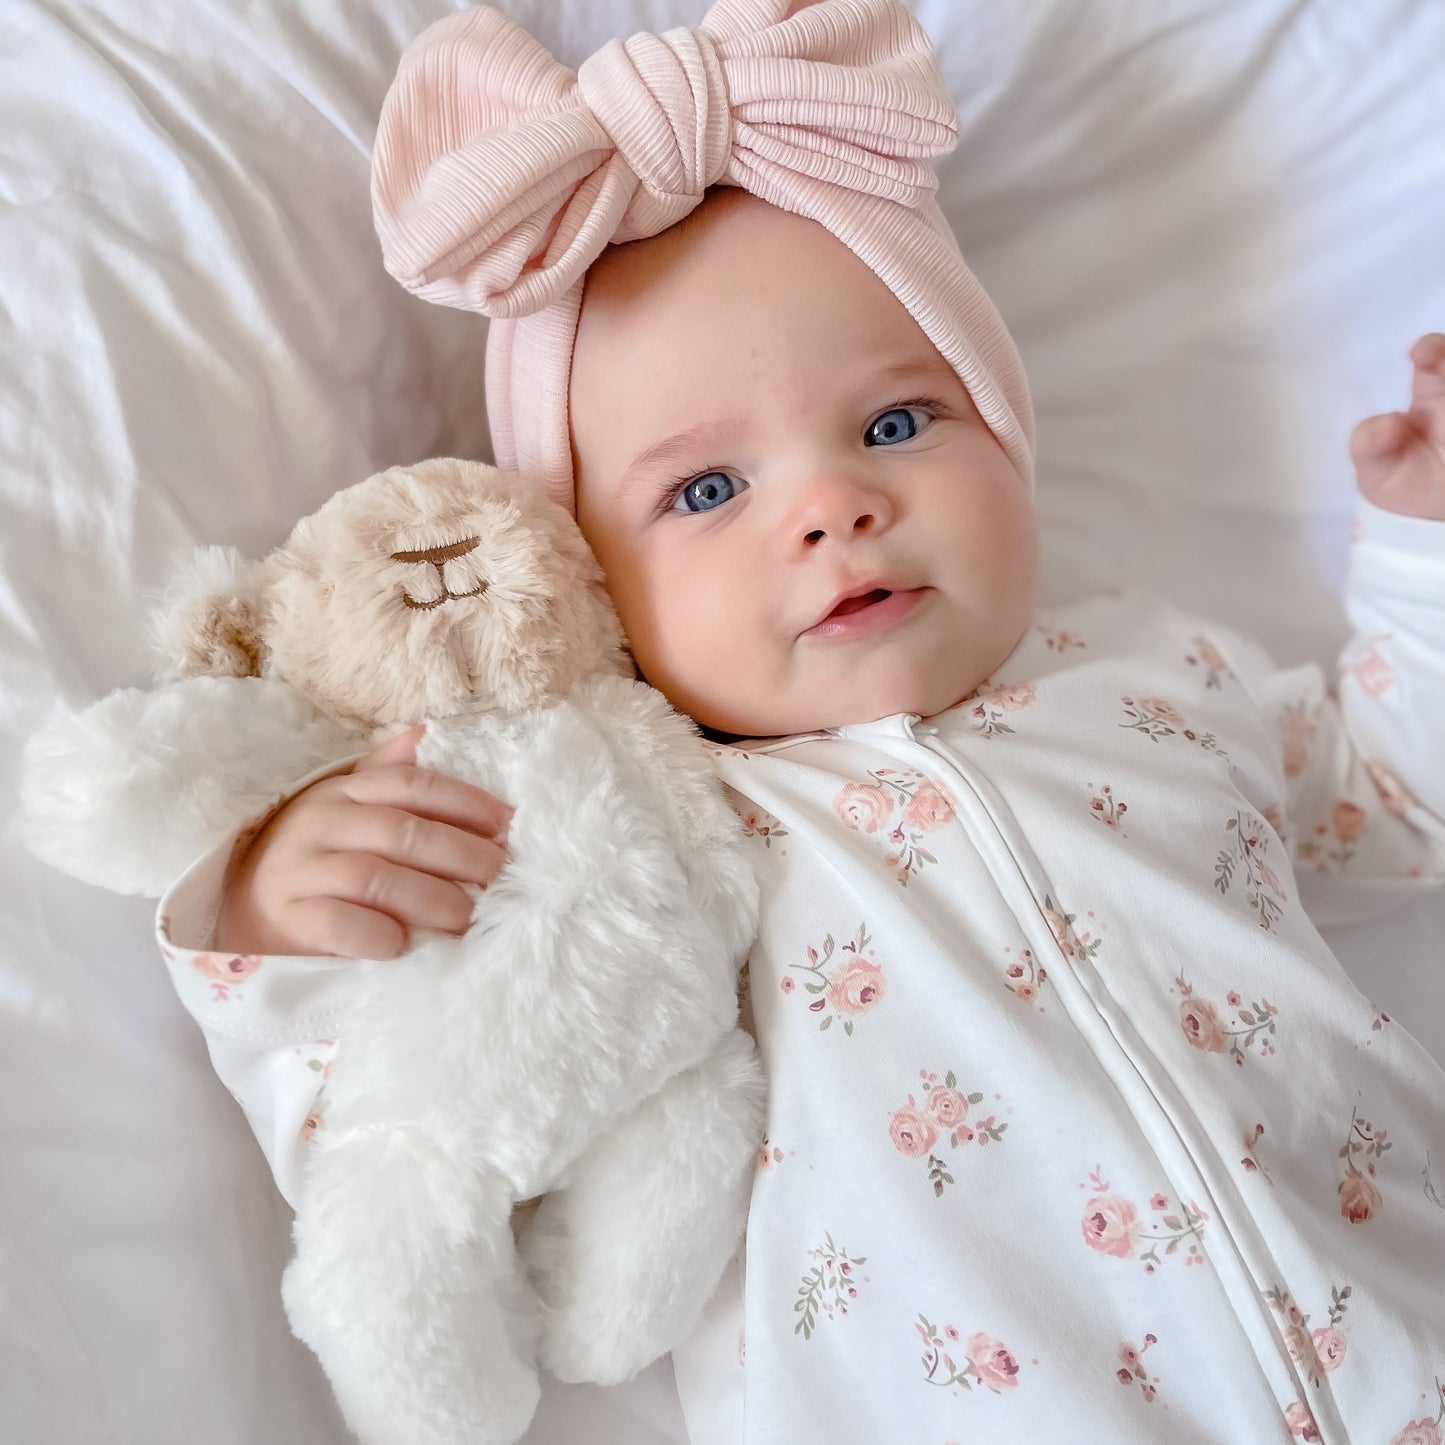 Baby girl, pink topknot, belle sleep suit, lamb teddy